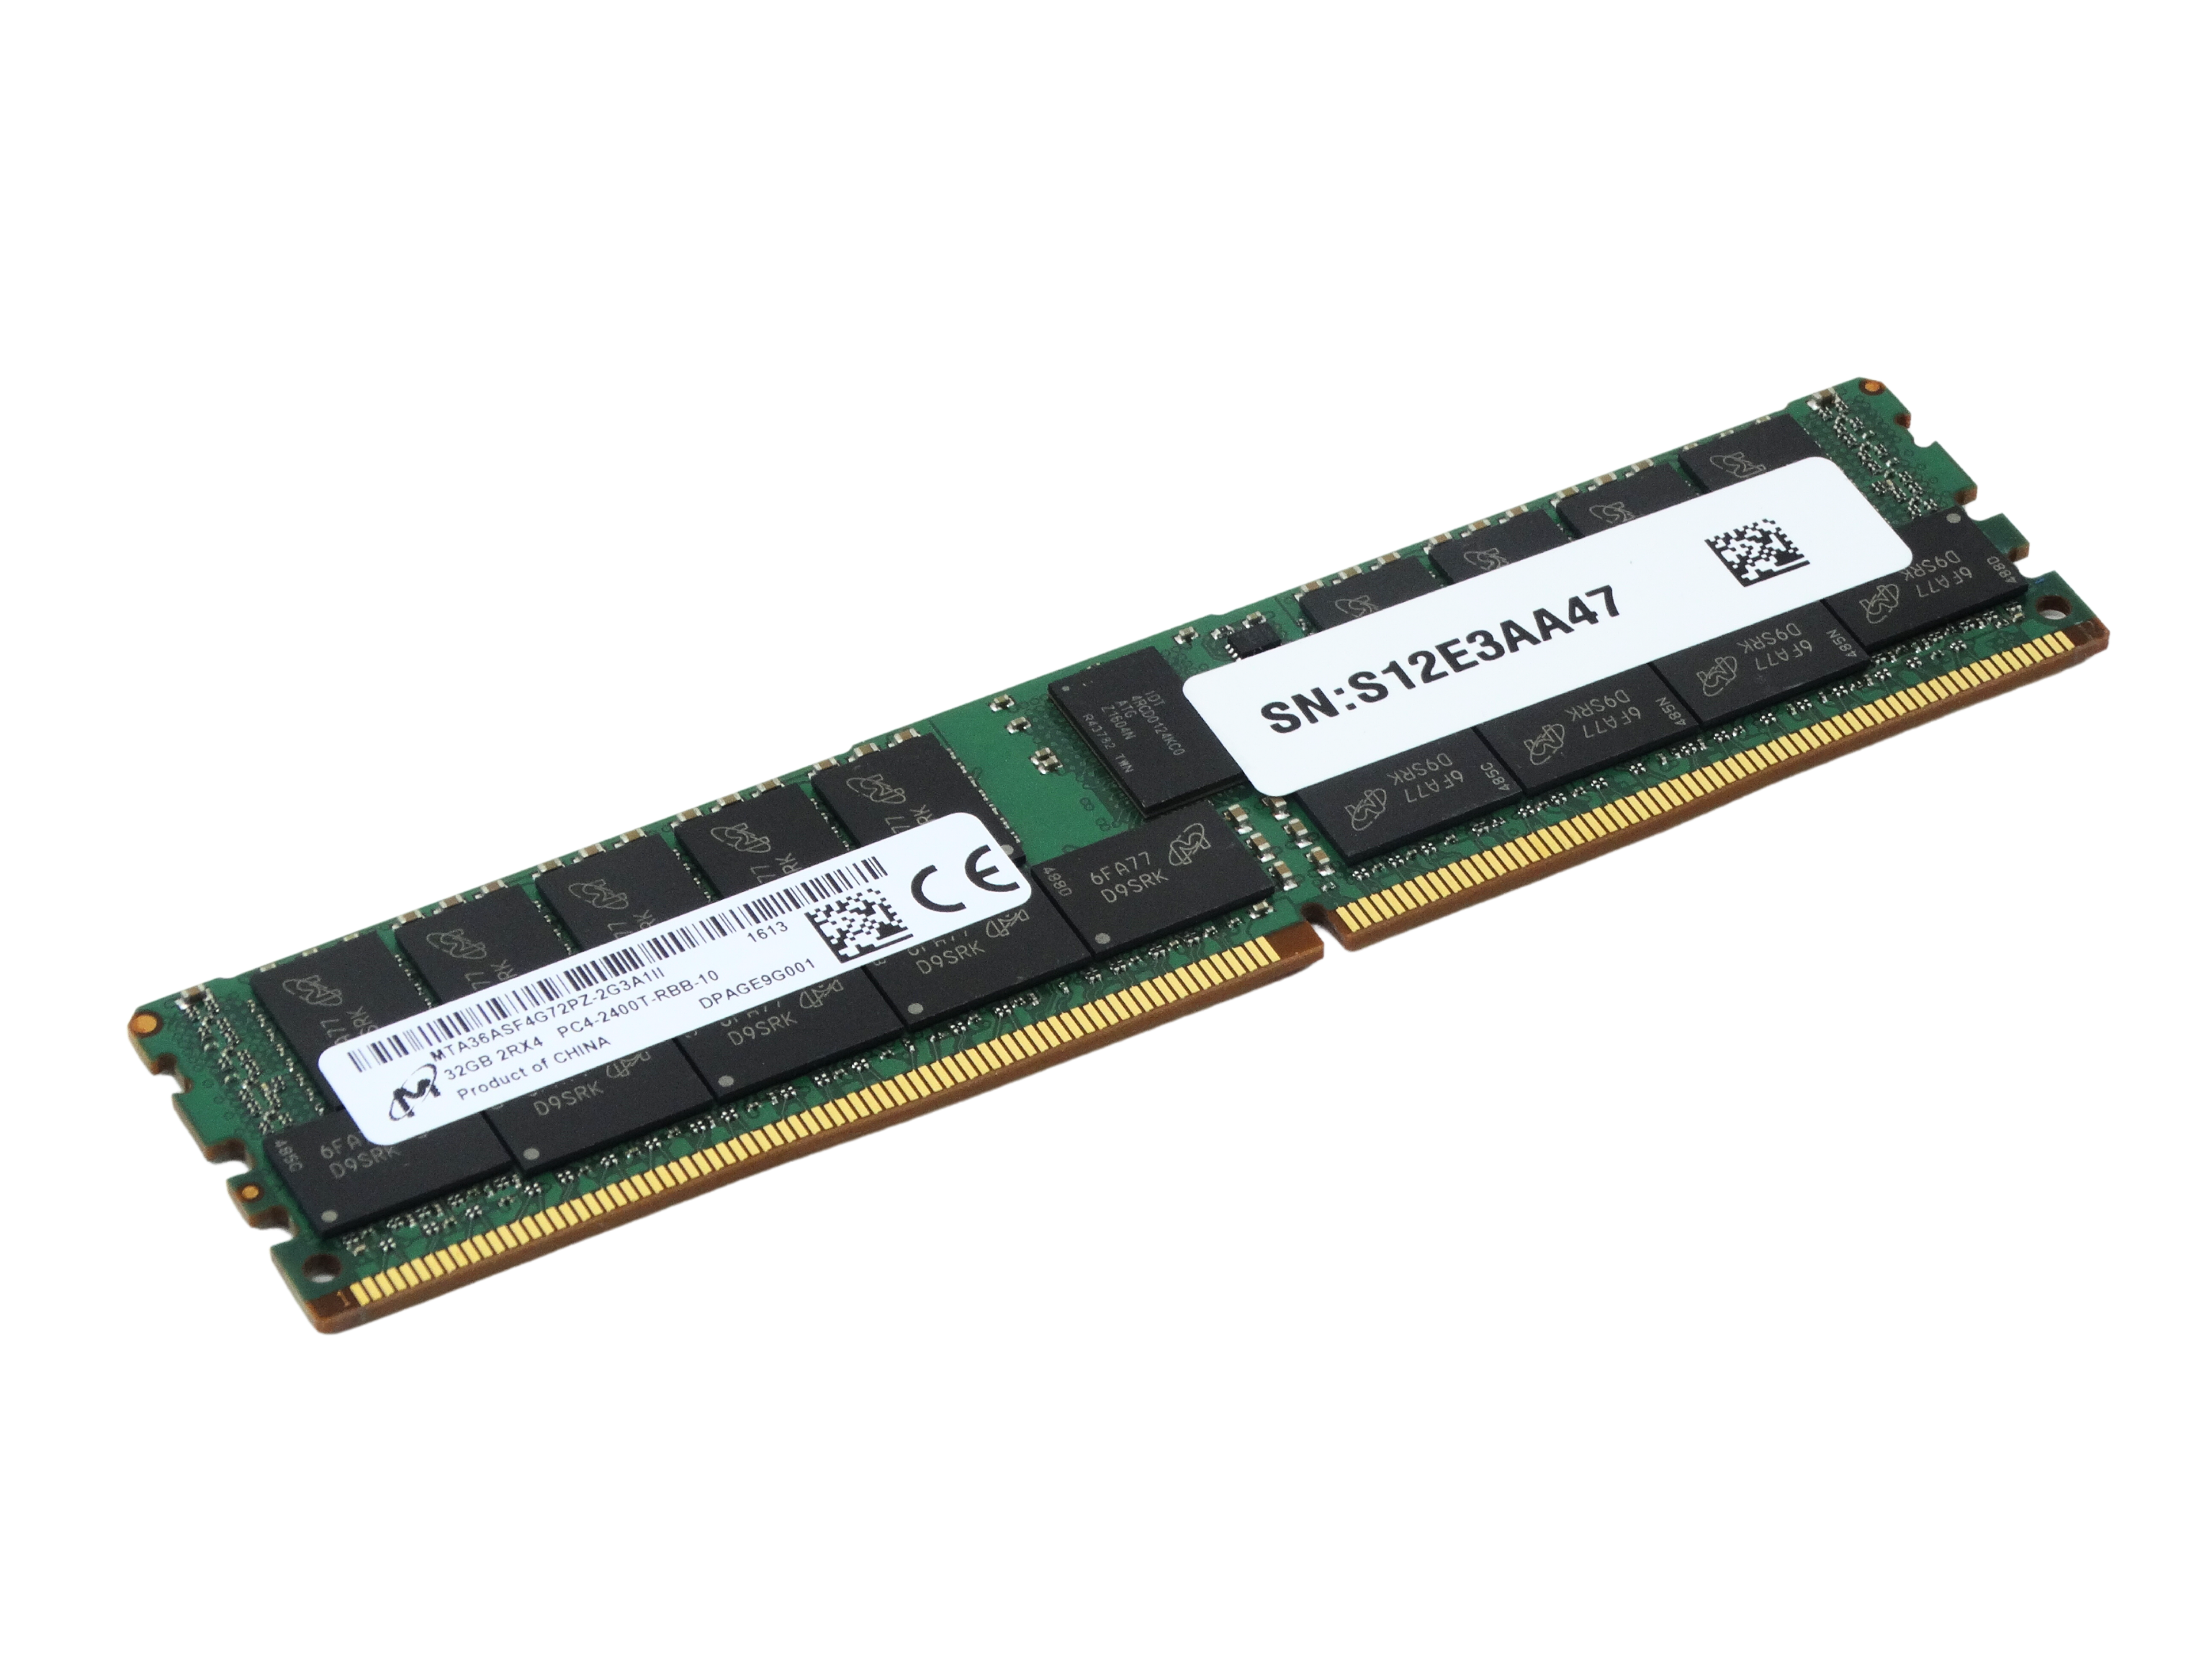 Micron 32GB 2Rx4 PC4-2400T DDR4 ECC Registered Memory (78P4622-3rdParty)